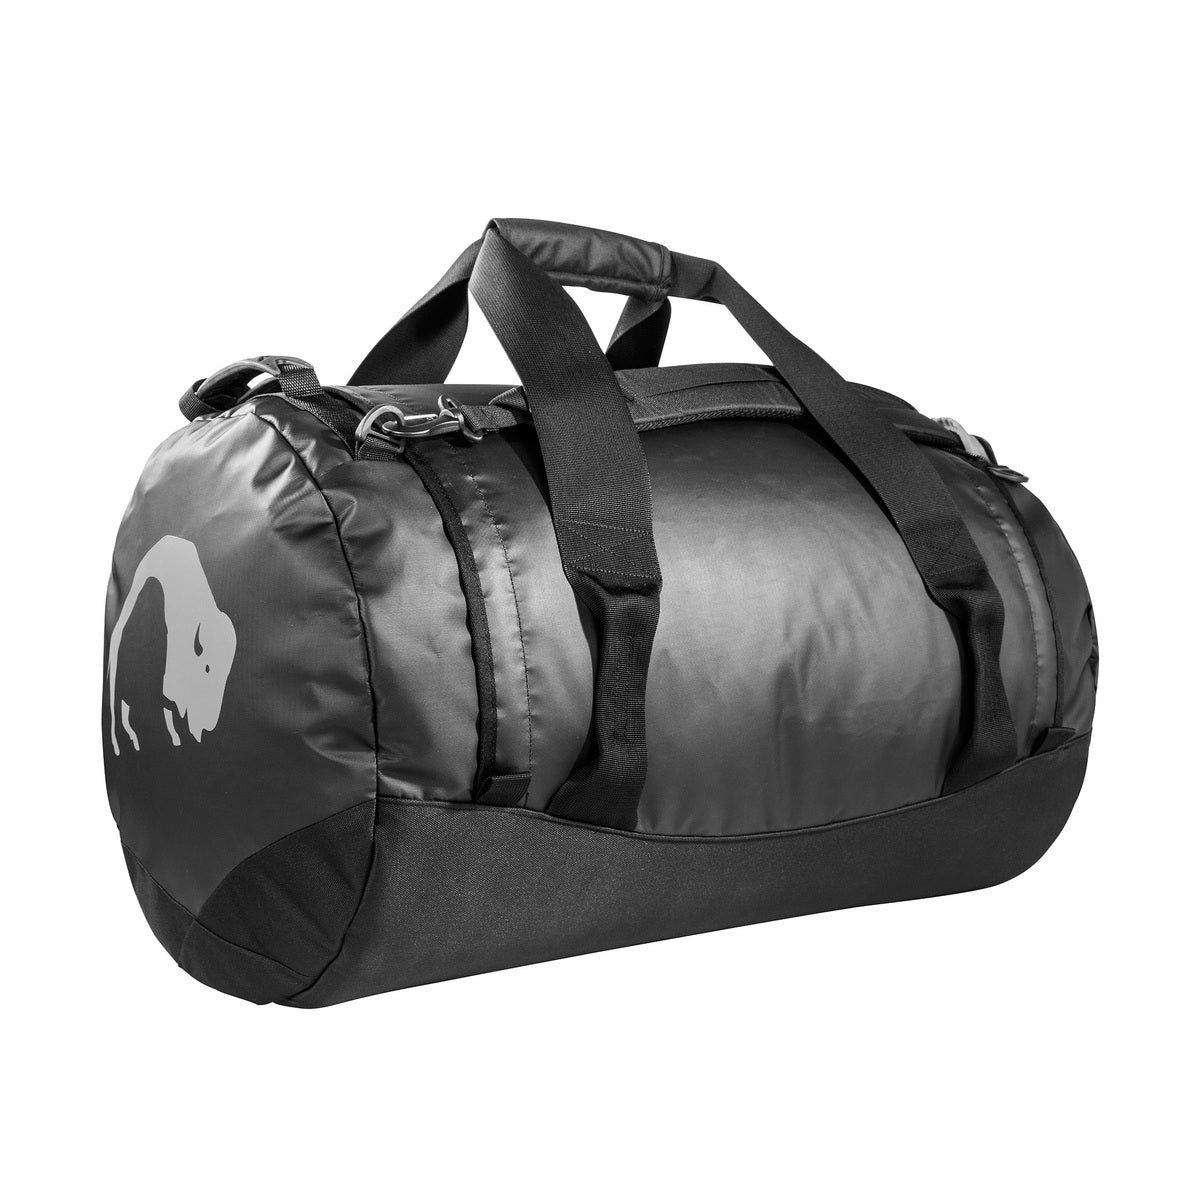 Tatonka Barrel Medium Travel bag 65 L Tactical Gear Australia Supplier Distributor Dealer